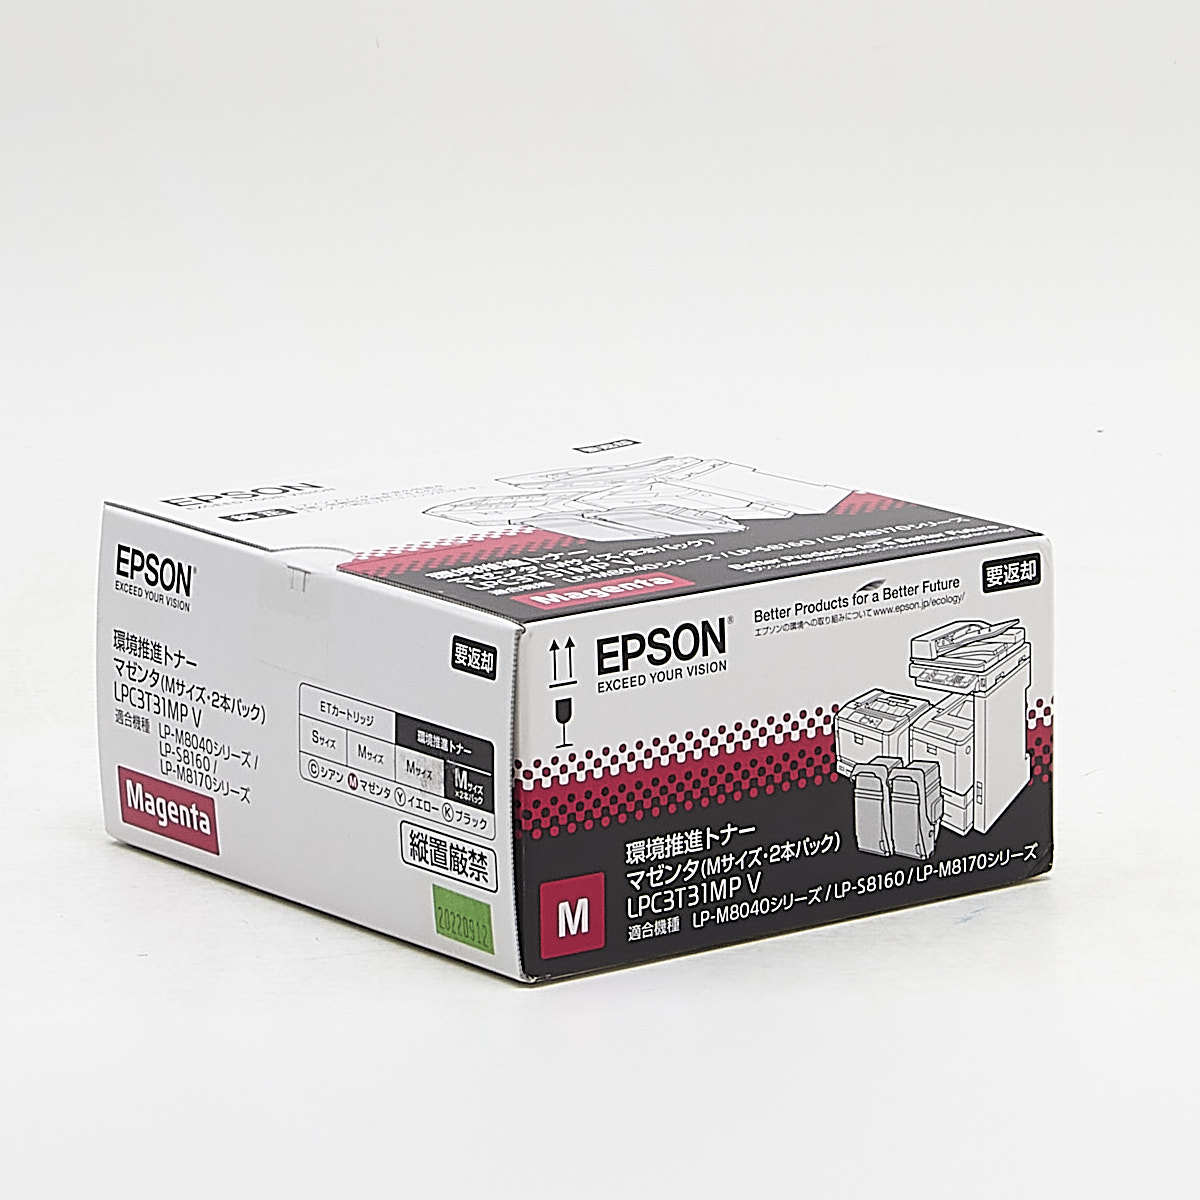 EPSON LPC3T31MPV 環境推進トナー マゼンタ (Mサイズ2本パック) 純正 適合機種 LP-M8040シリーズ/LP-S8160/LP-M8170シリーズ